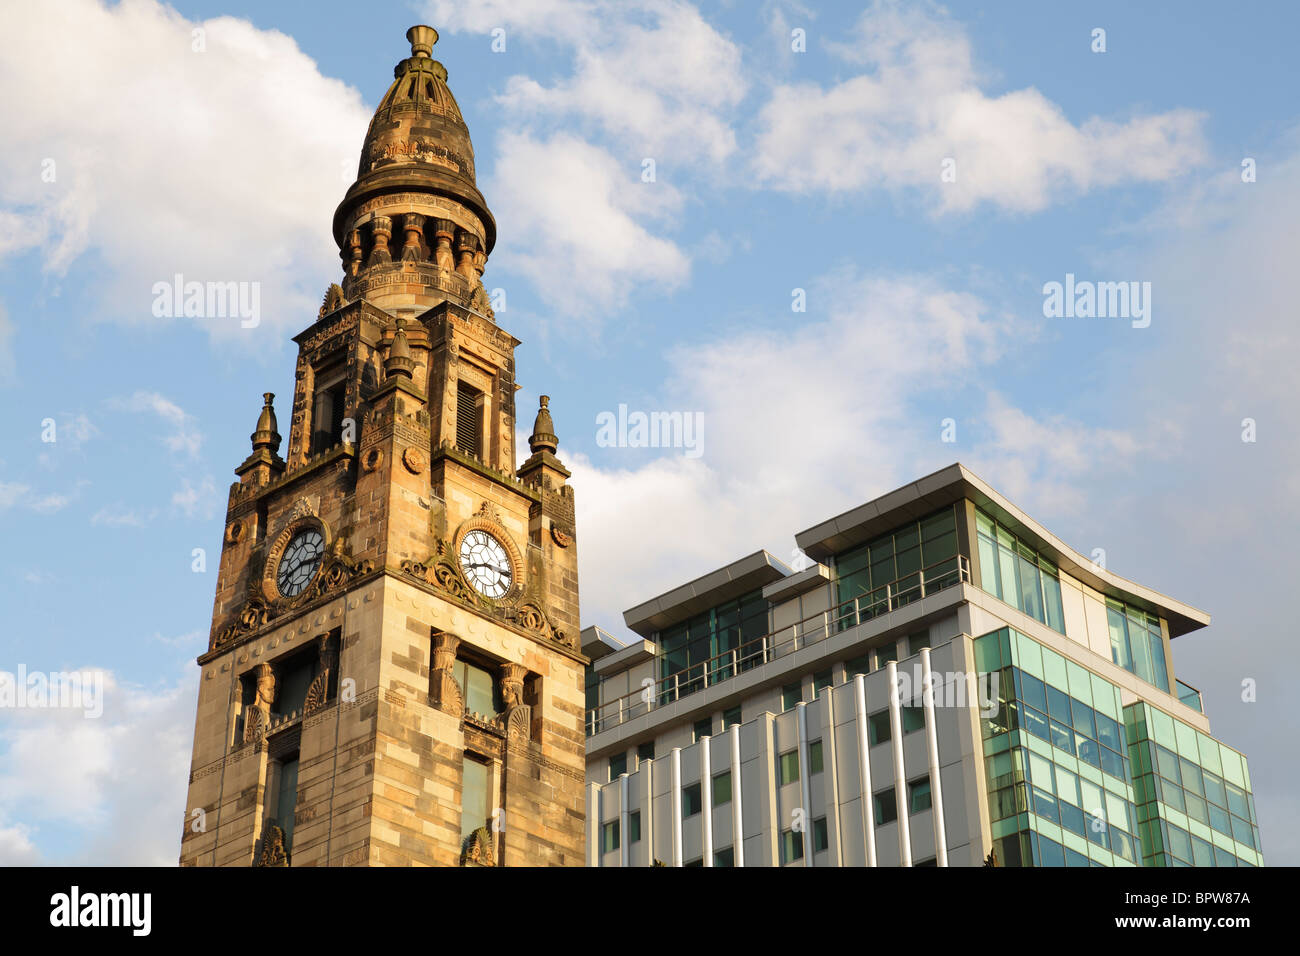 St Vincent Street Church tower designed by architect Alexander Greek Thomson, St Vincent Street, Glasgow, Scotland, UK Stock Photo